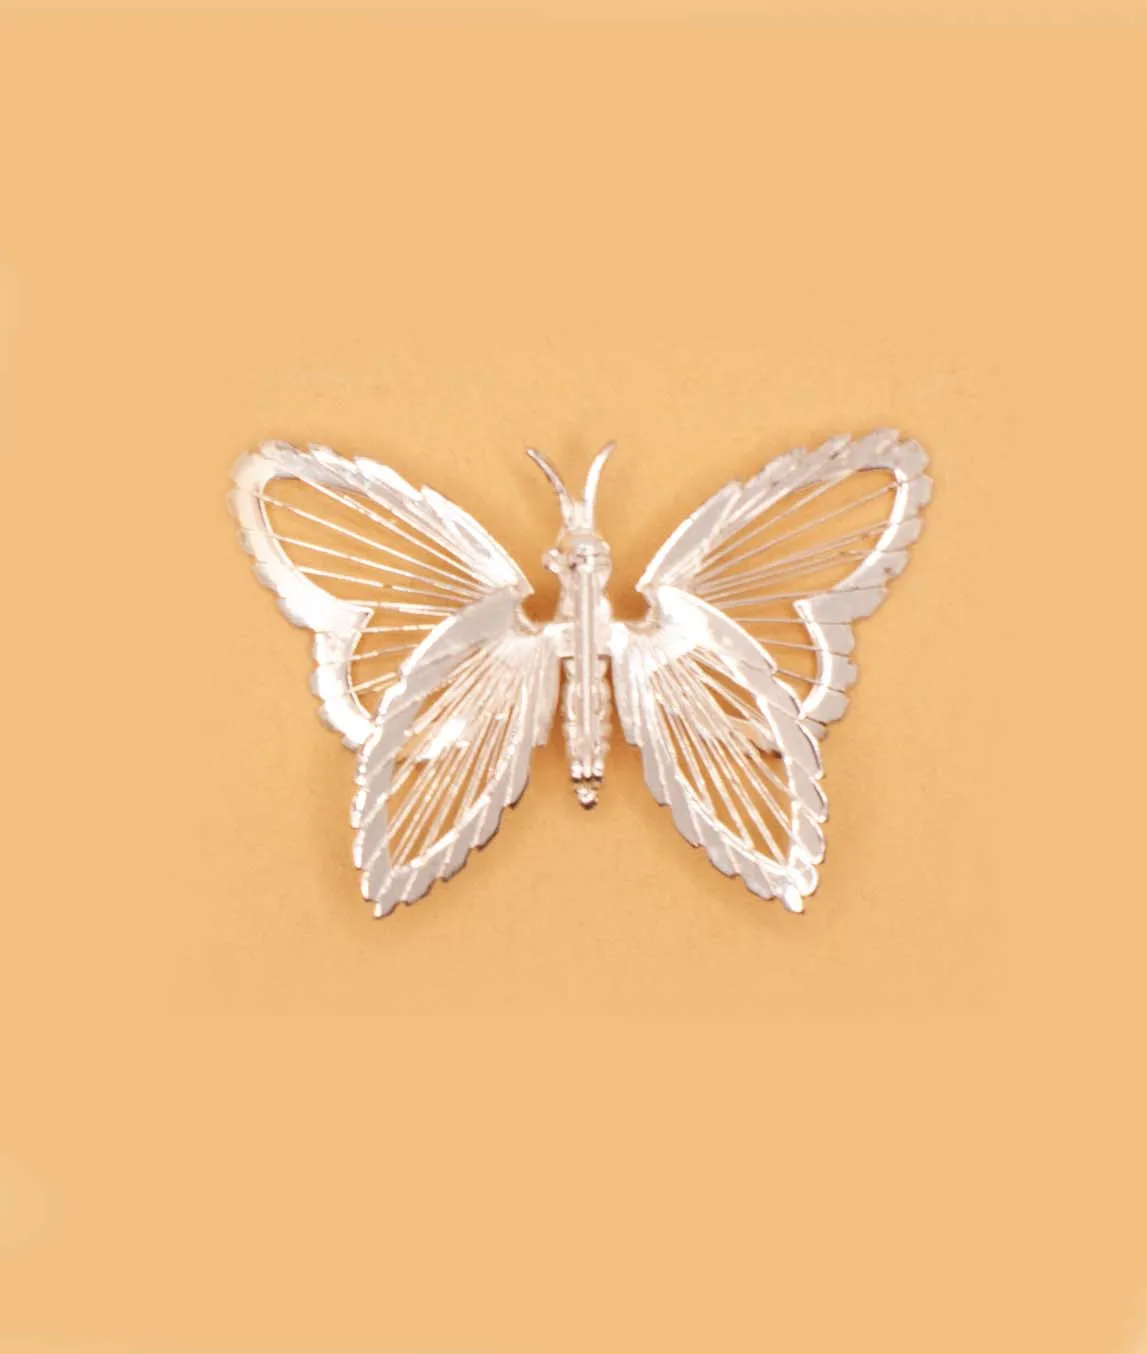 Monet silver tone wire butterfly brooch back view on beige background